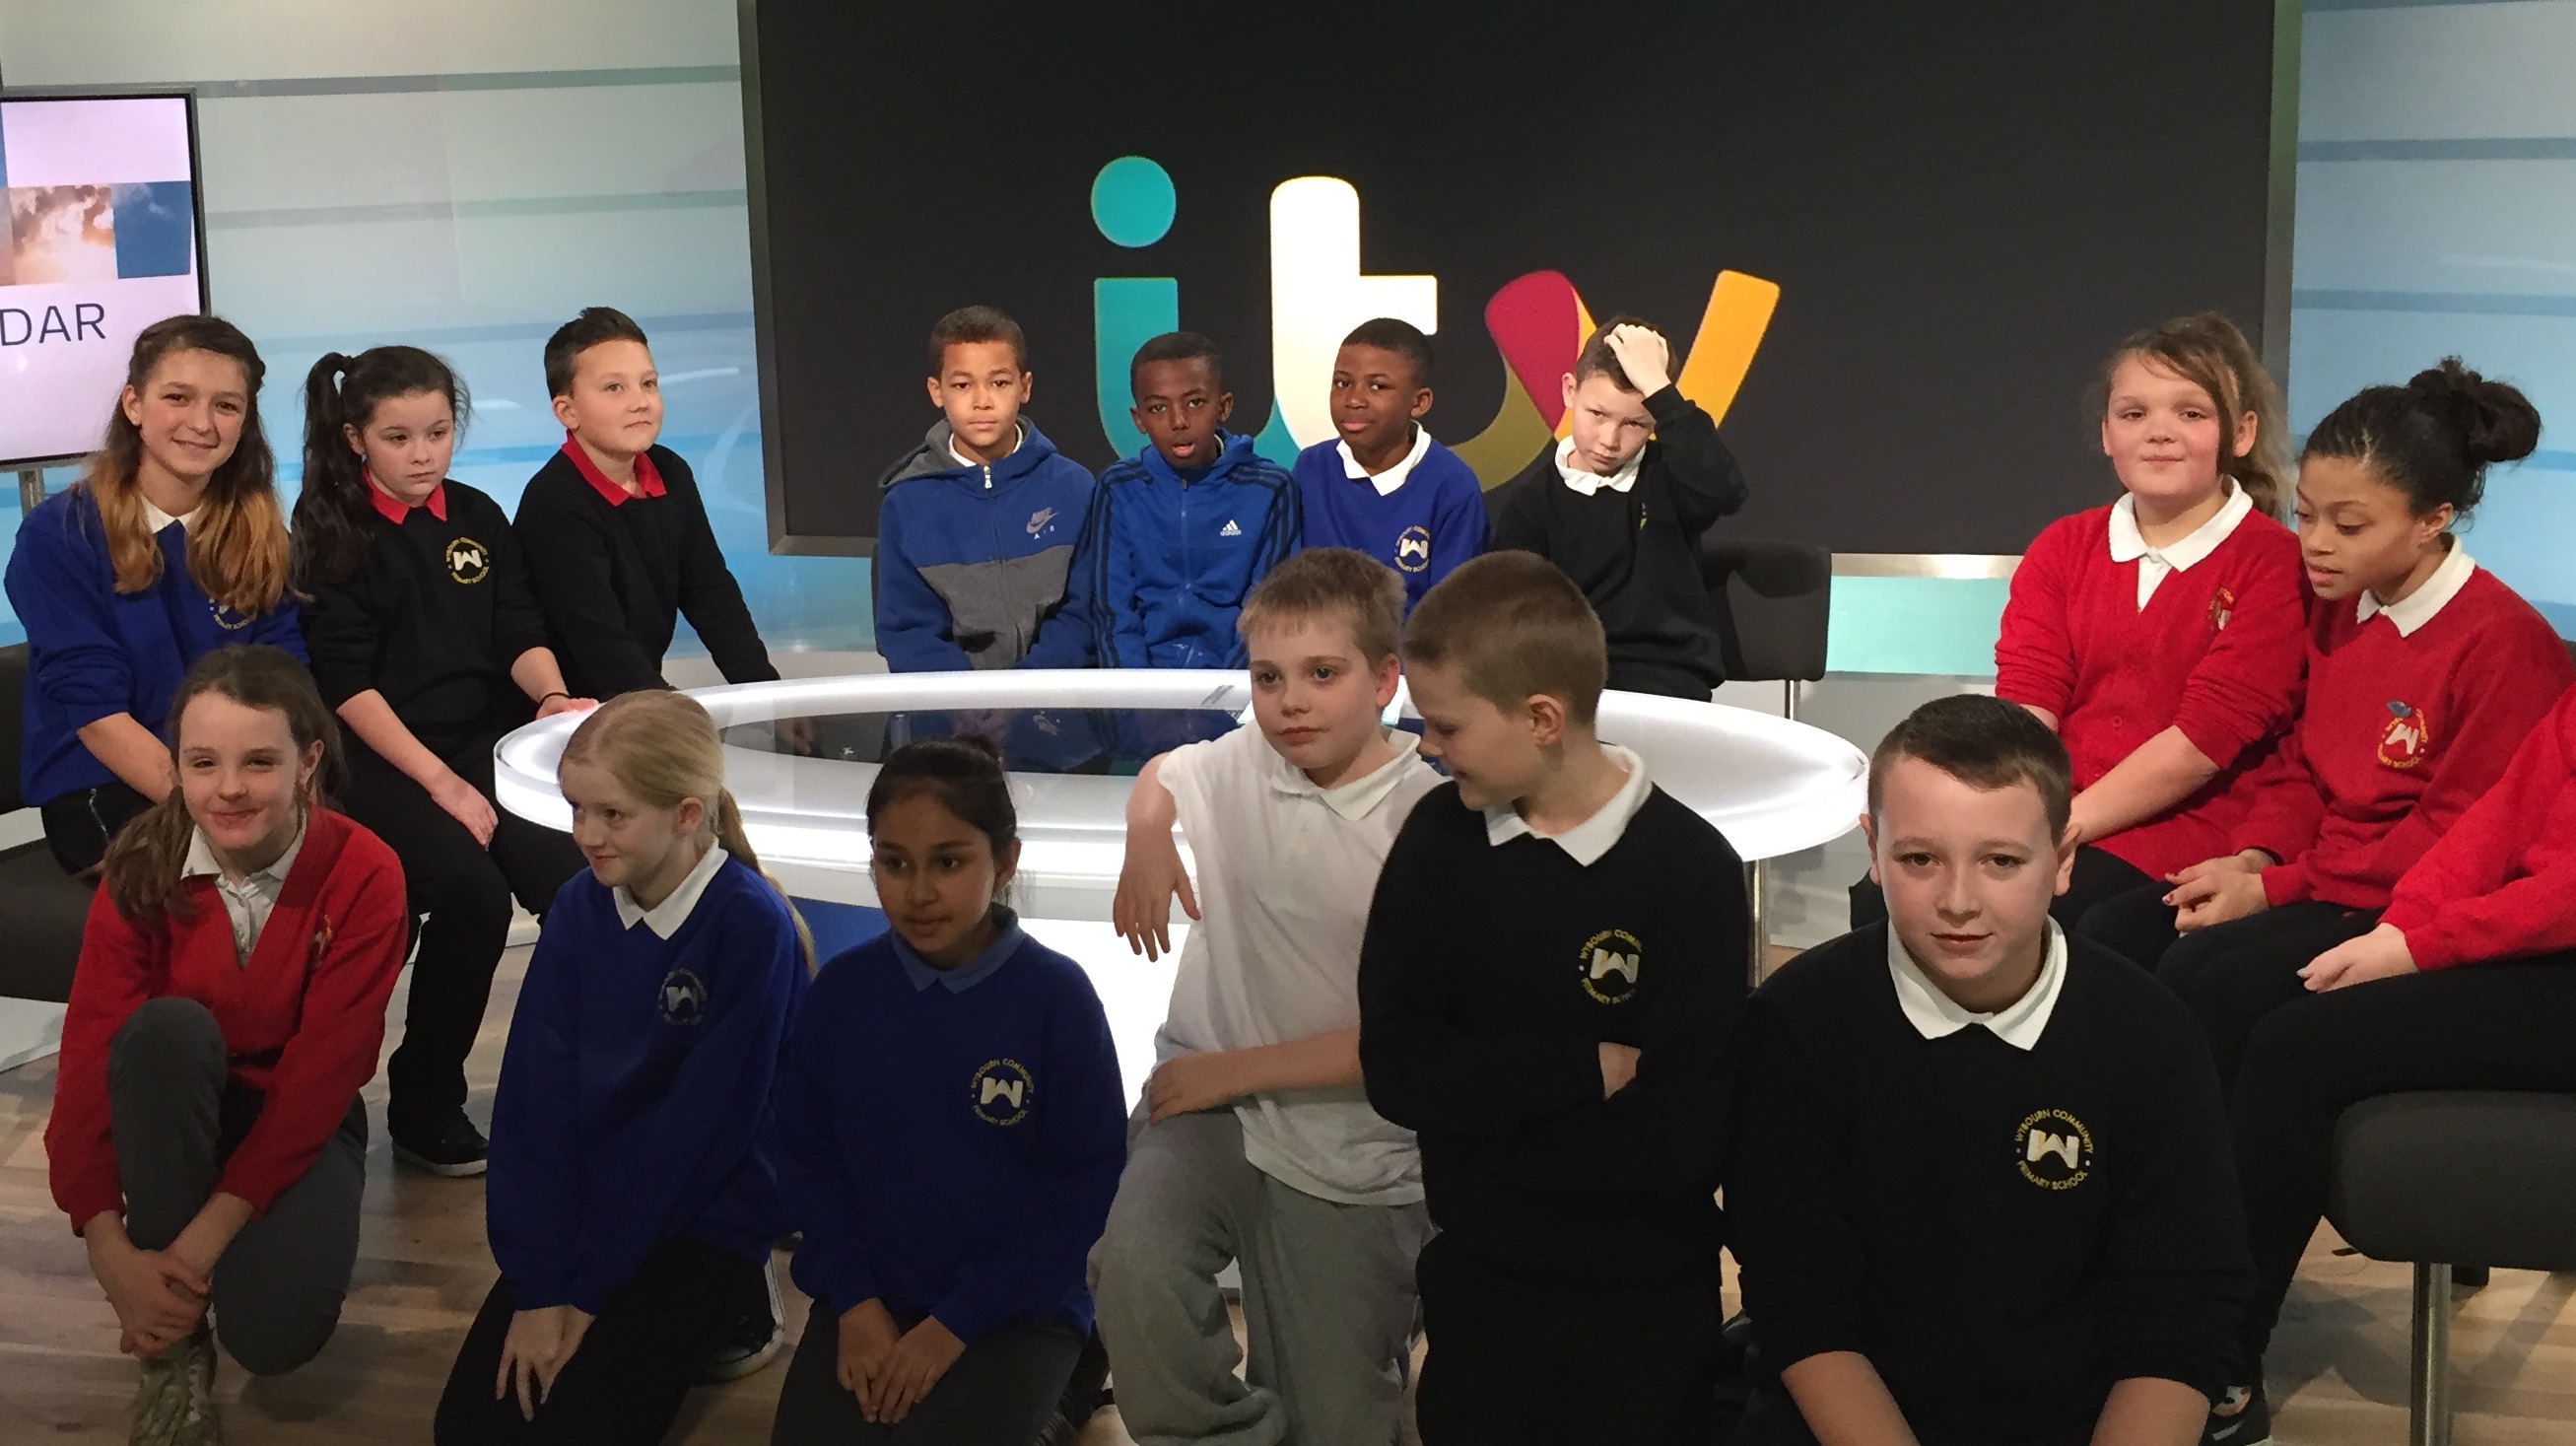 Sheffield pupils treated to Calendar studio visit ITV News Calendar